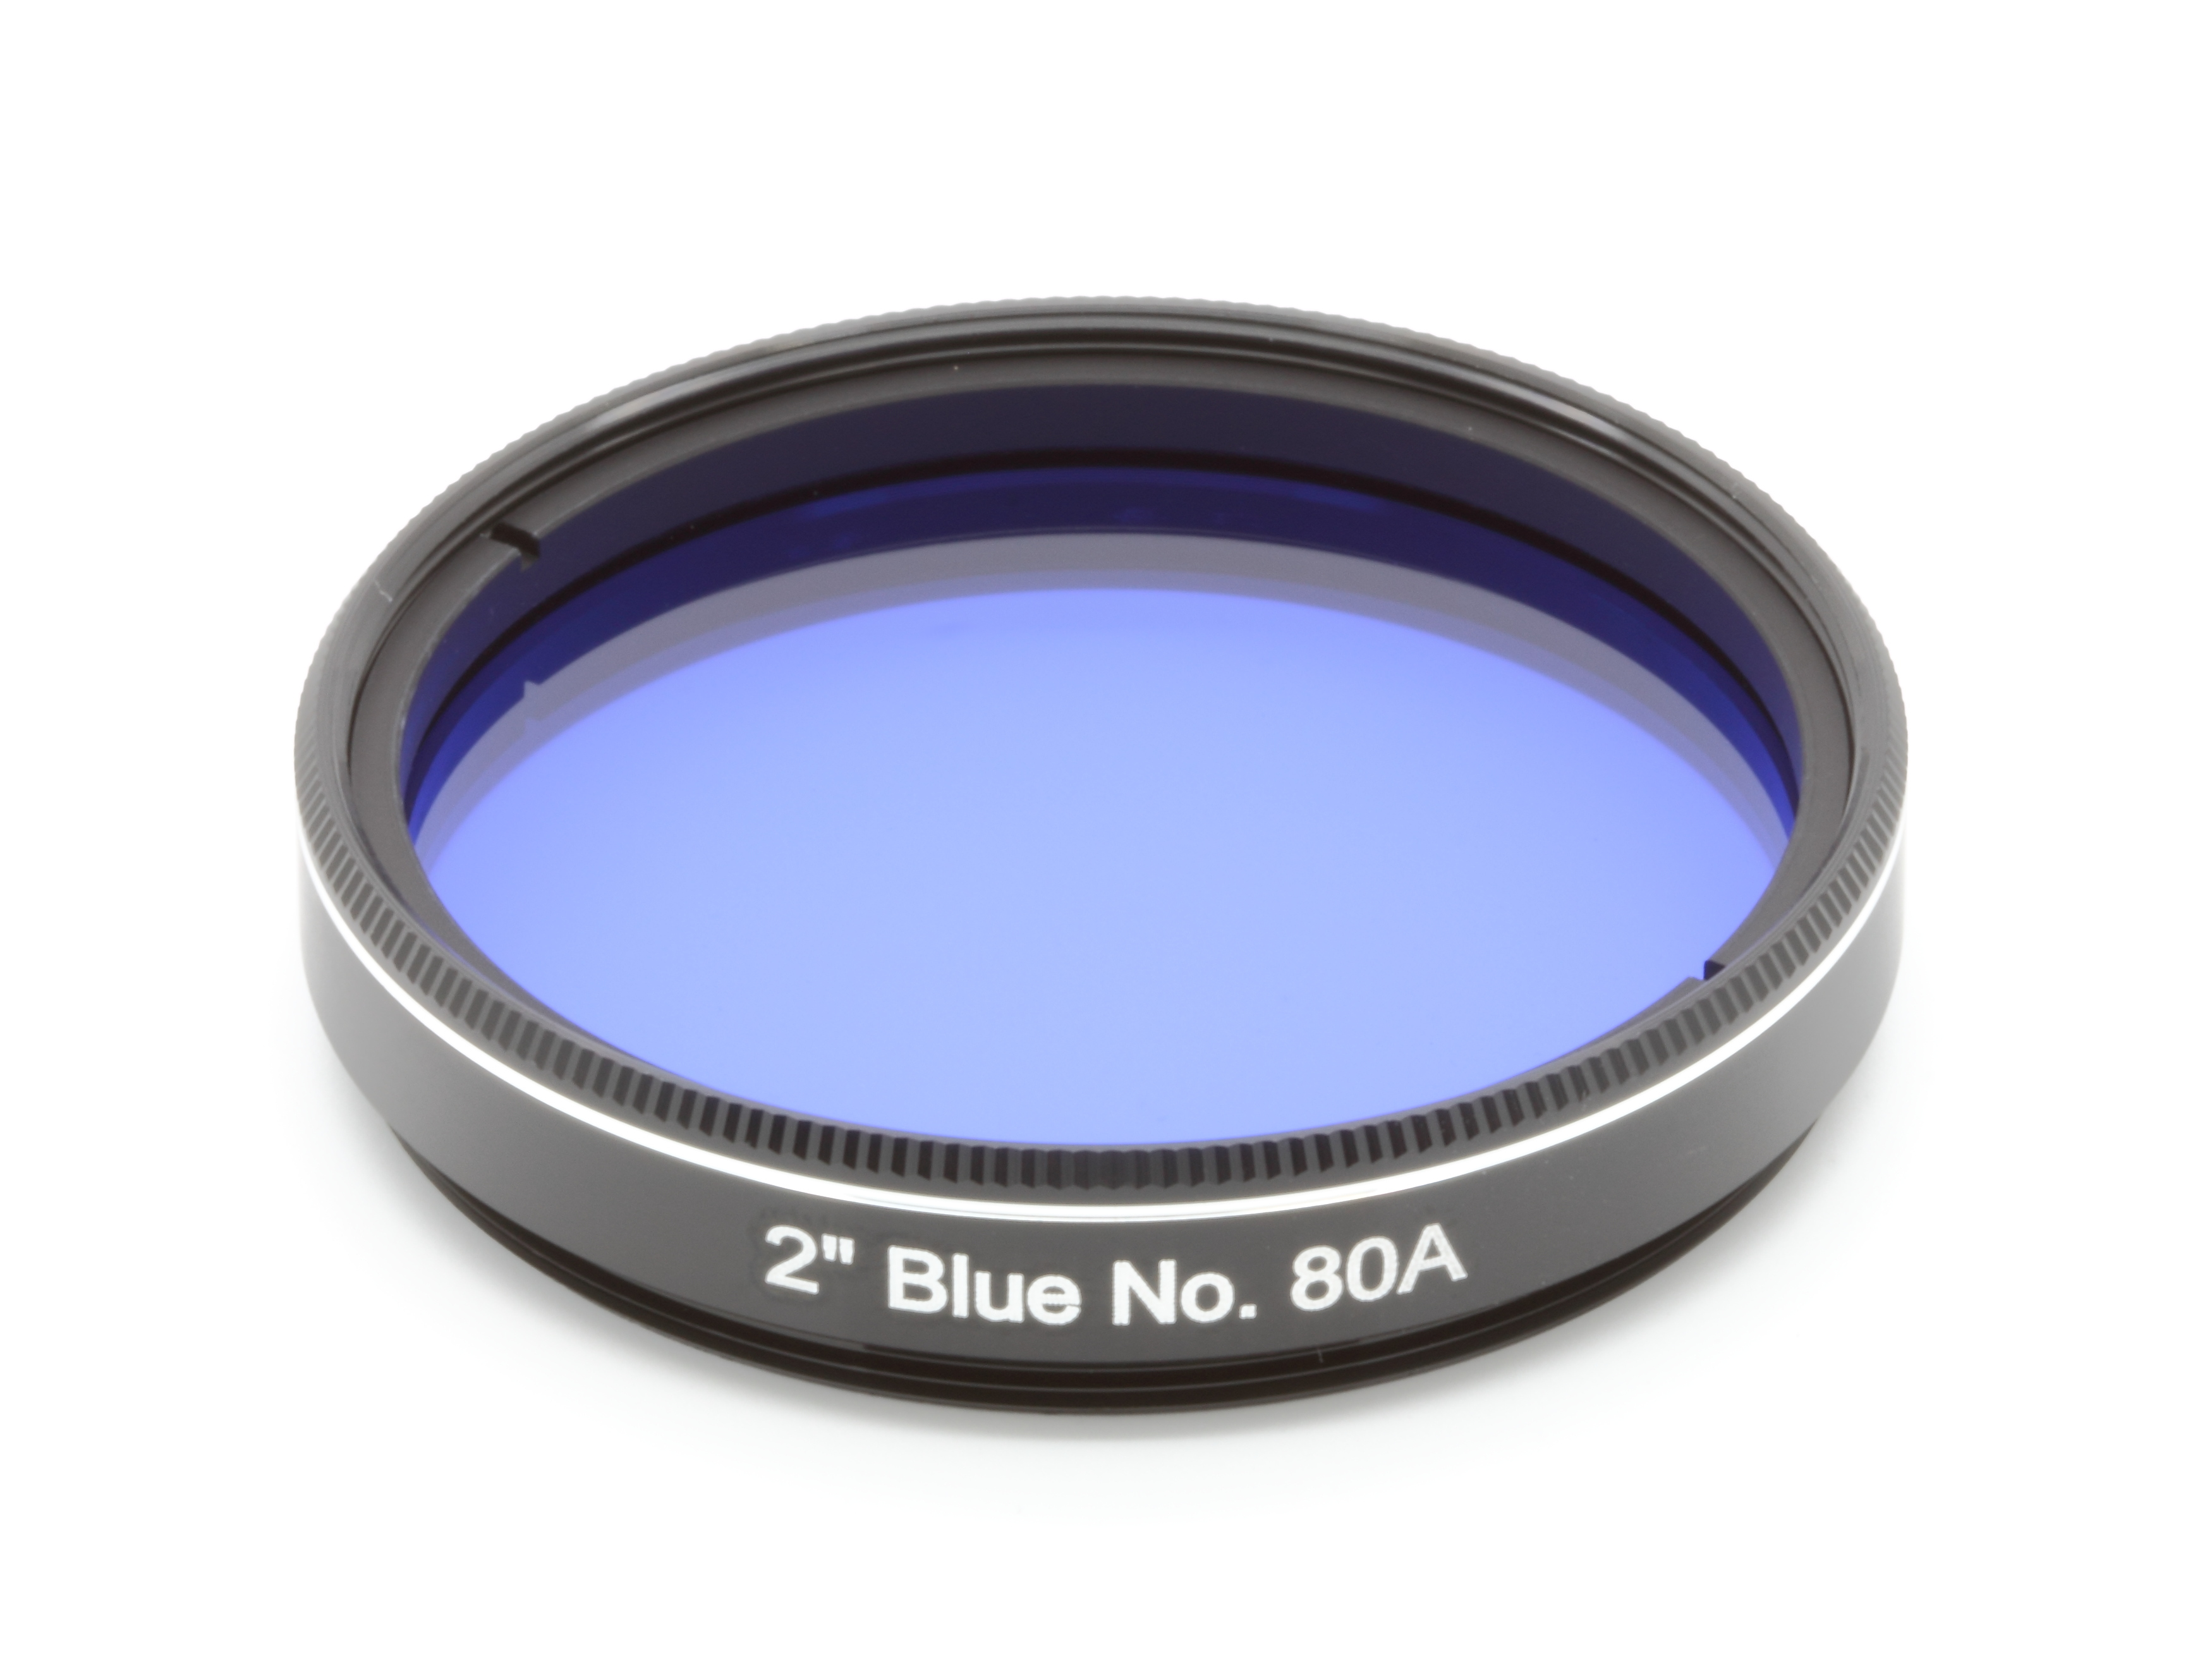 EXPLORE SCIENTIFIC Filter 2" Blue No.80A 